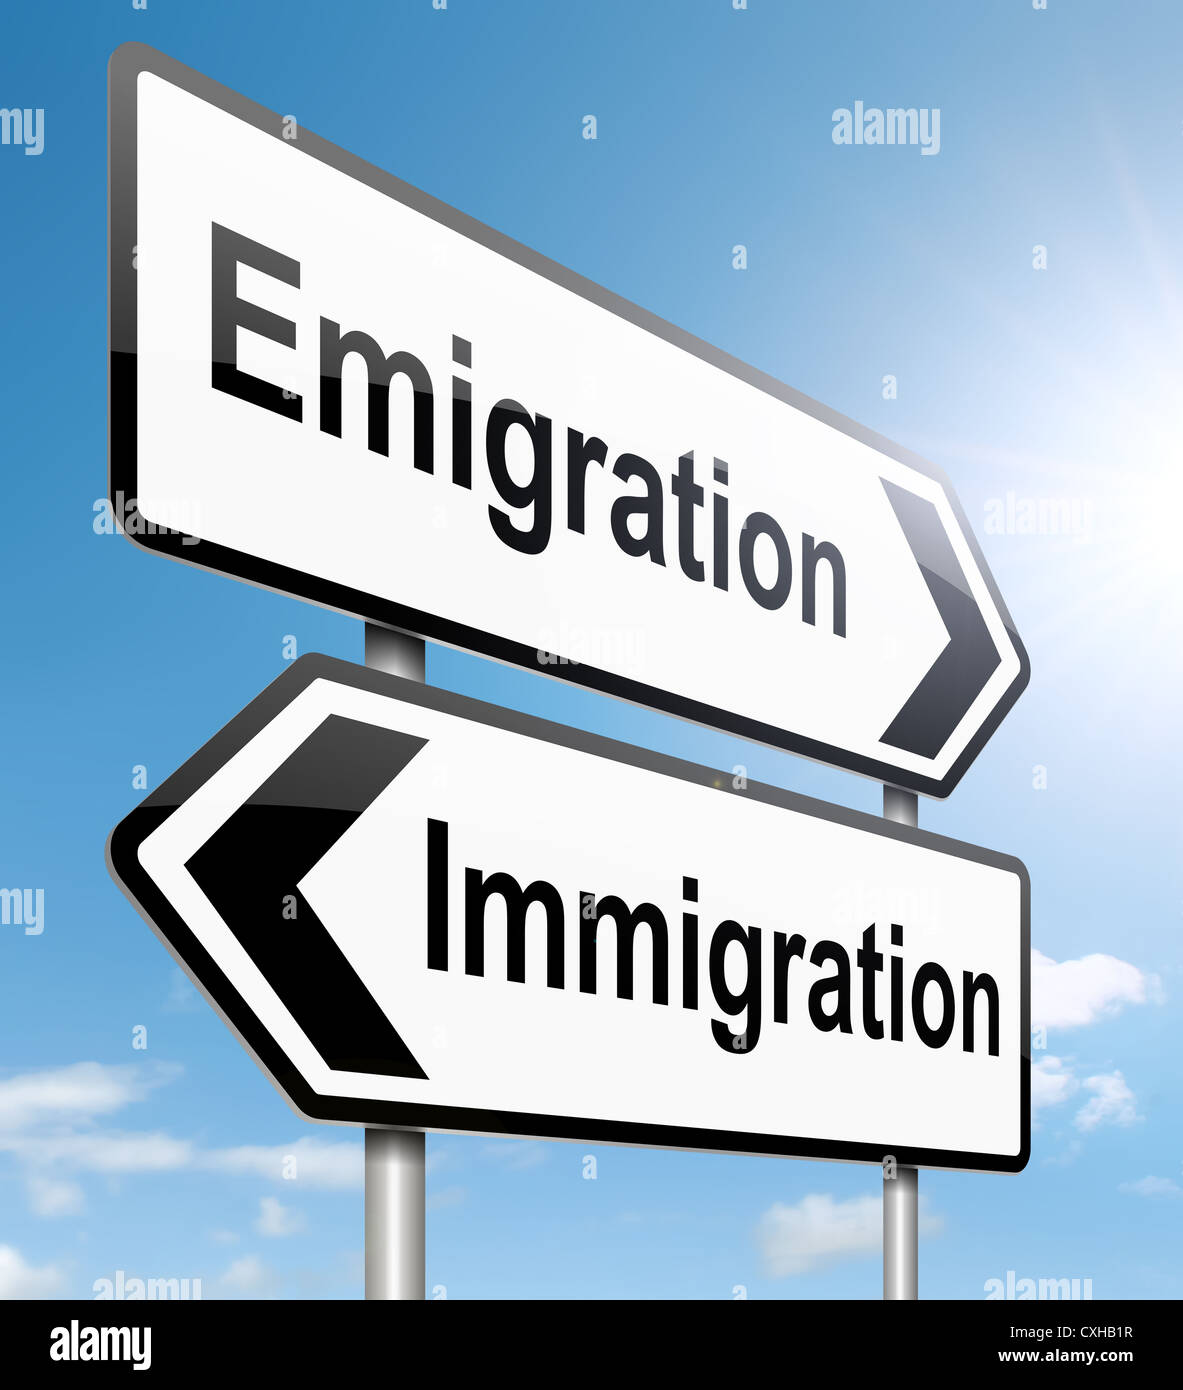 emigration